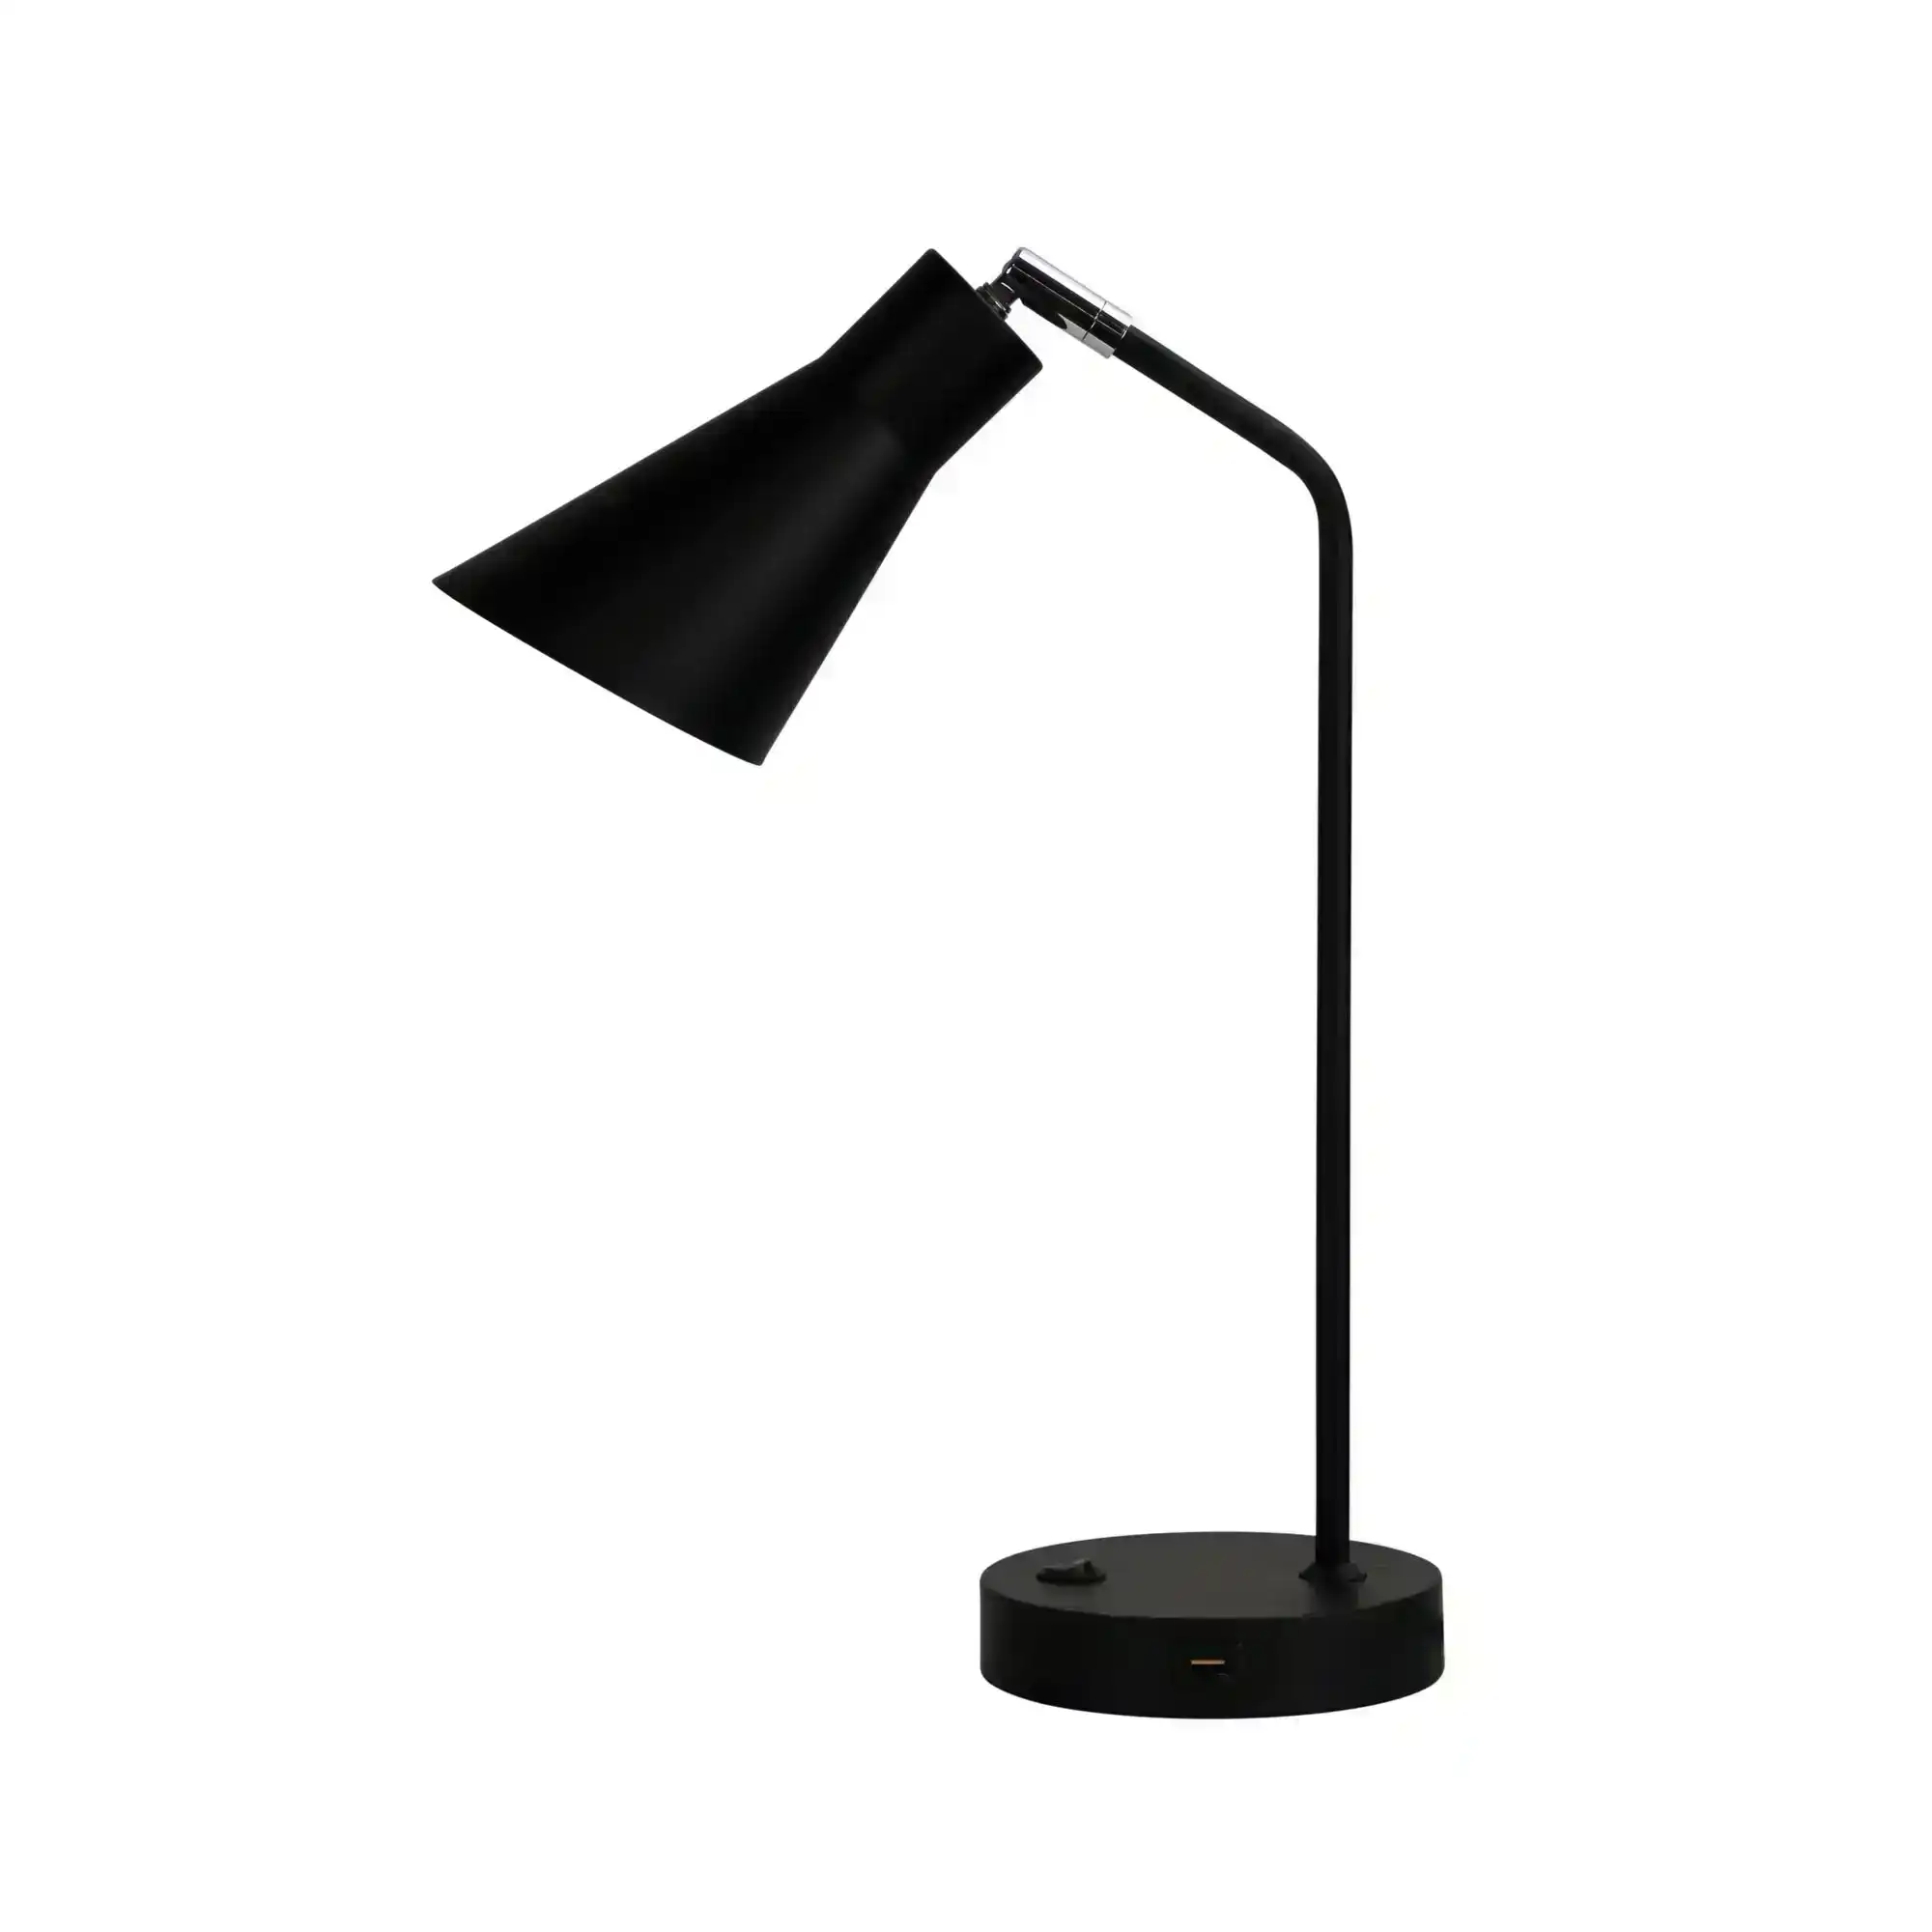 THOR DESK LAMP Black Desk Lamp with USB